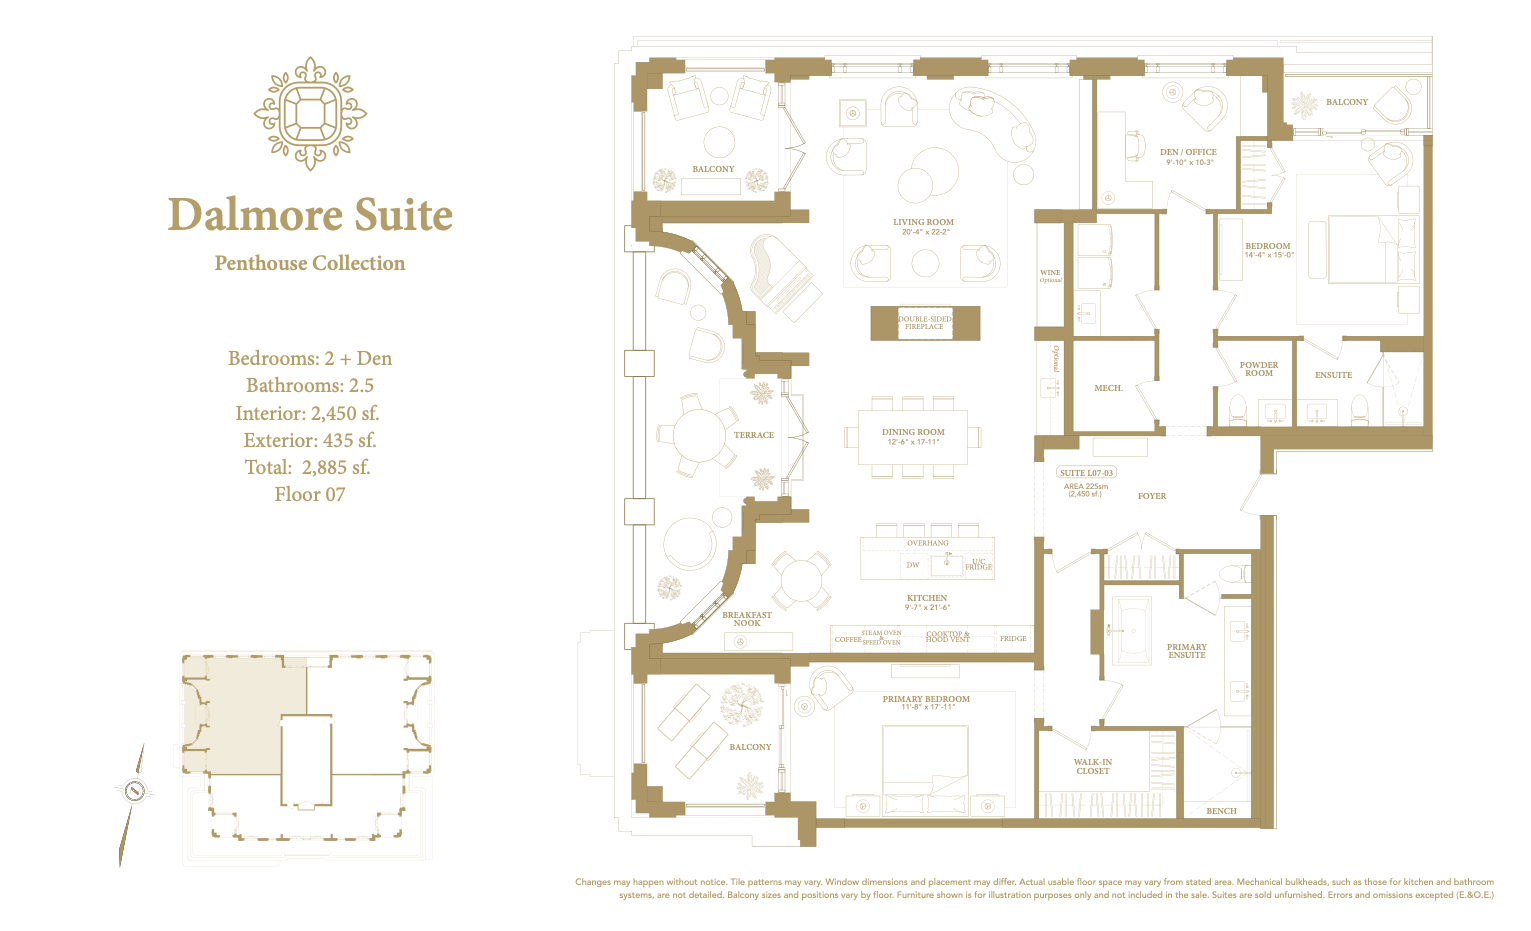 Dalmore Suite floor plans